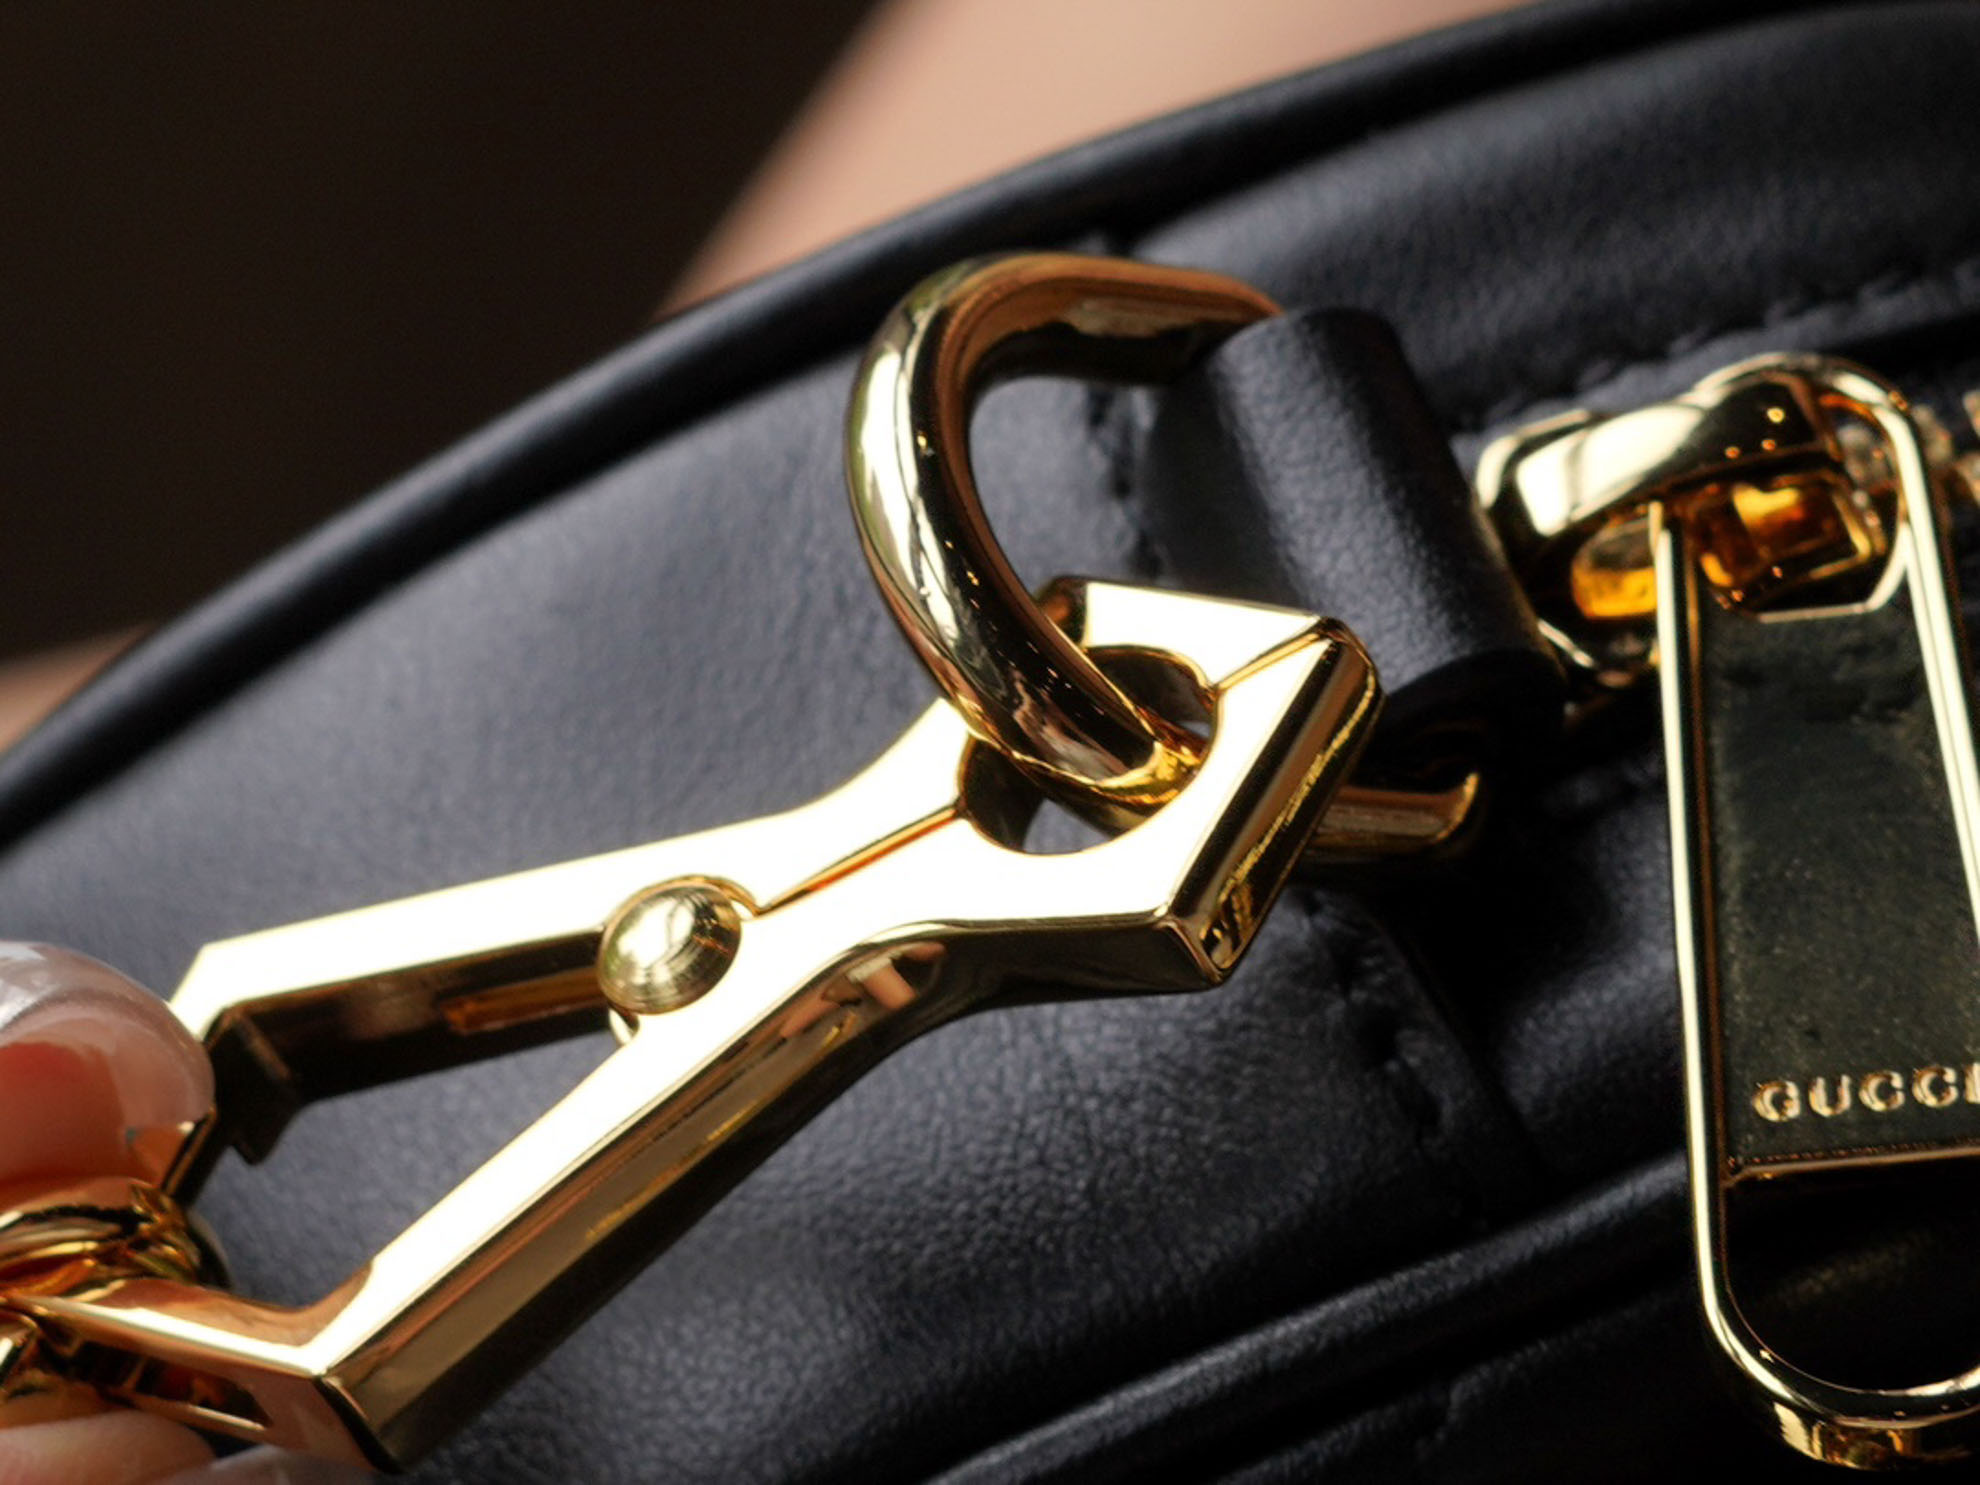 Túi Gucci Women's Black Interlocking G Mini Heart Leather Bag